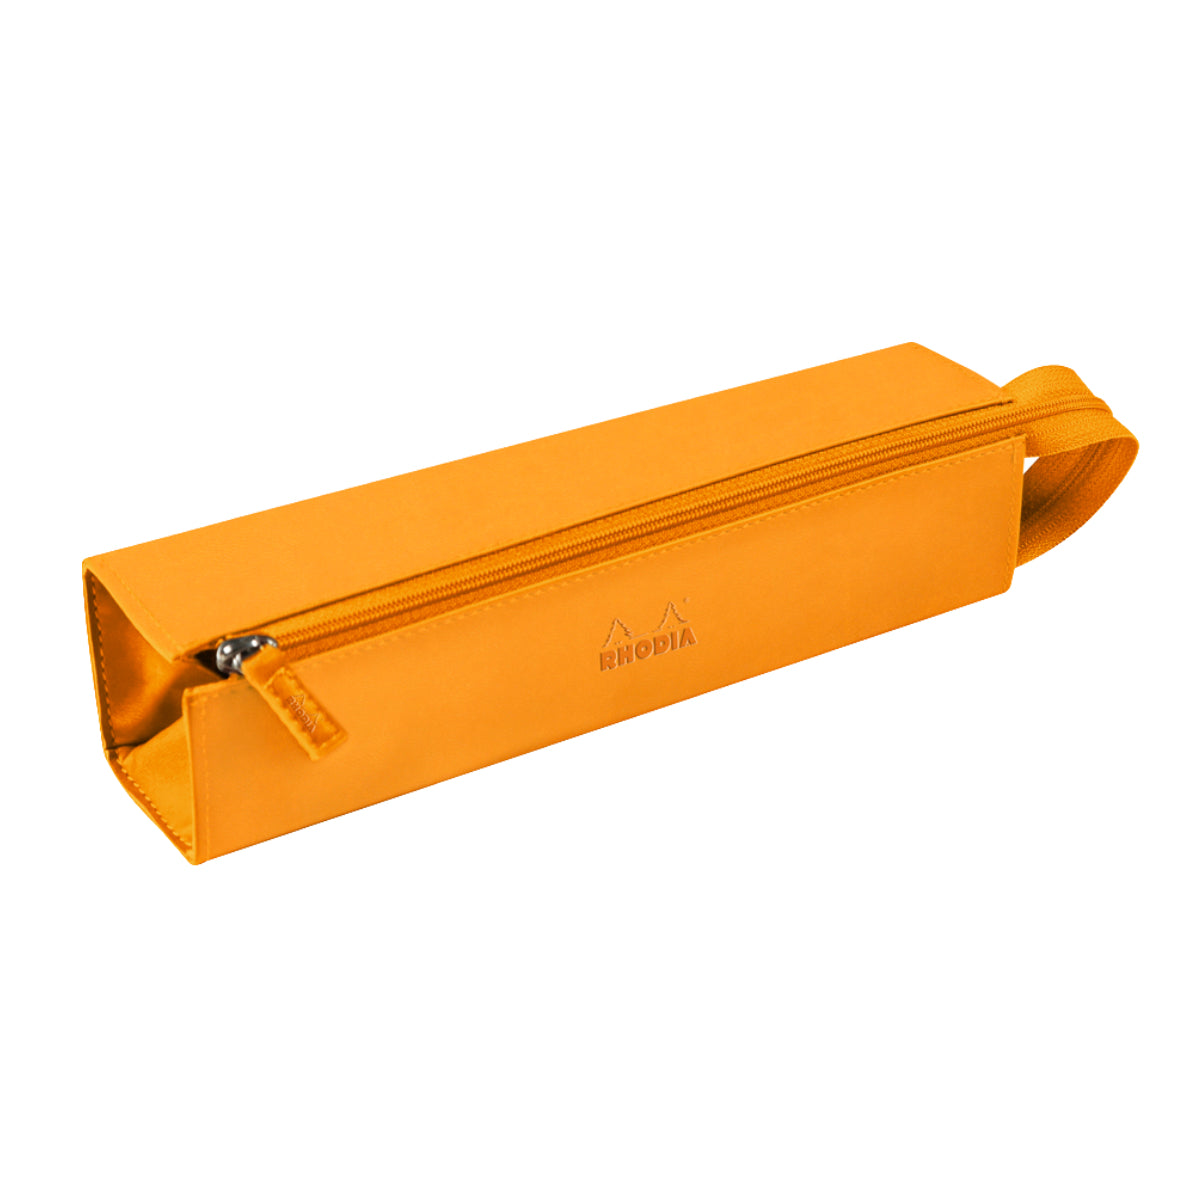 RHODIA rhodiarama Square Pencil Case with Zipper, PU Leather, 230 x 50 mm, Orange